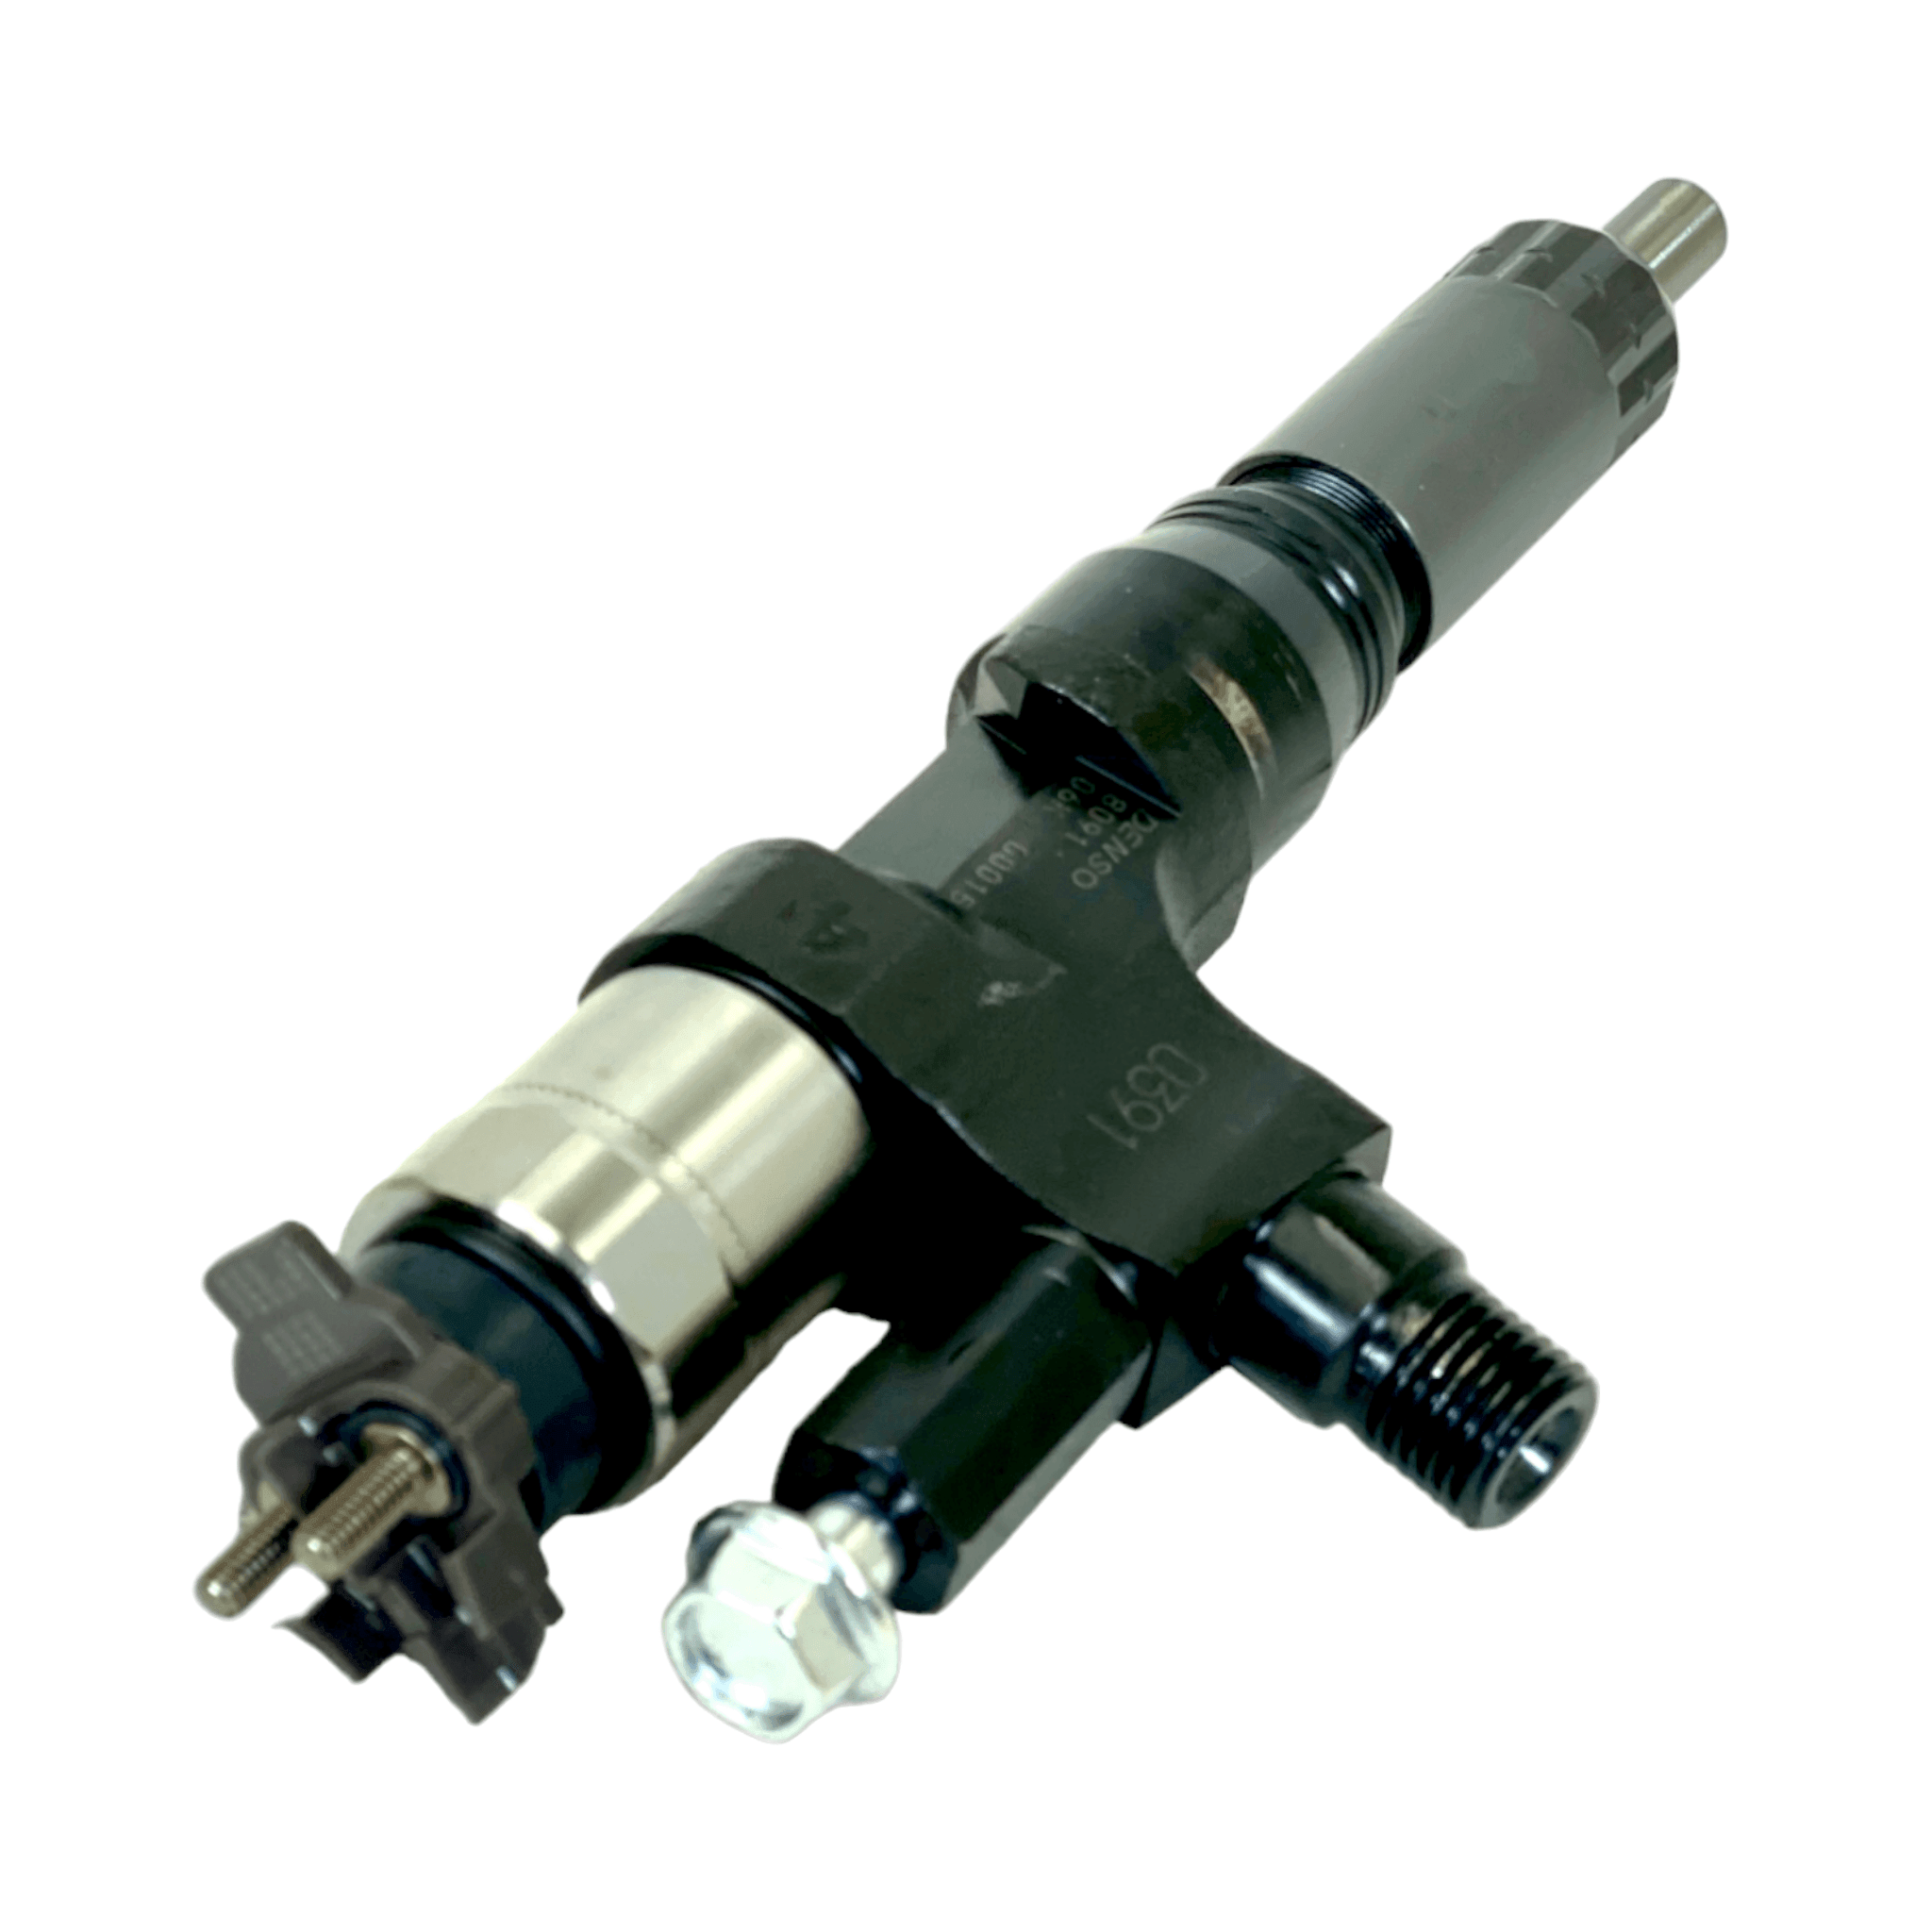 0950008098 Genuine Hino Fuel Injector - ADVANCED TRUCK PARTS